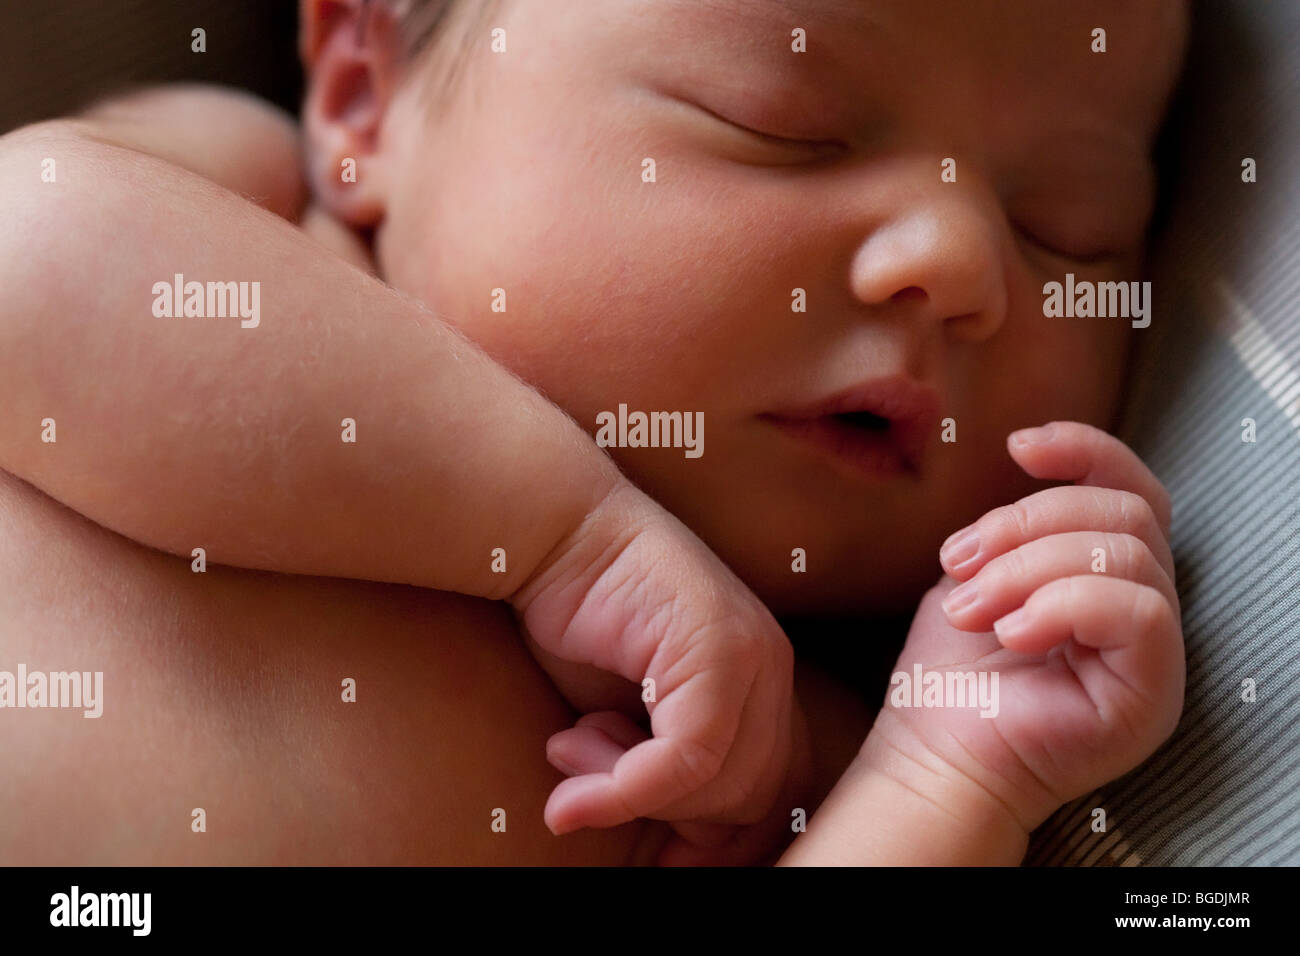 Baby sleeping close-up Stock Photo